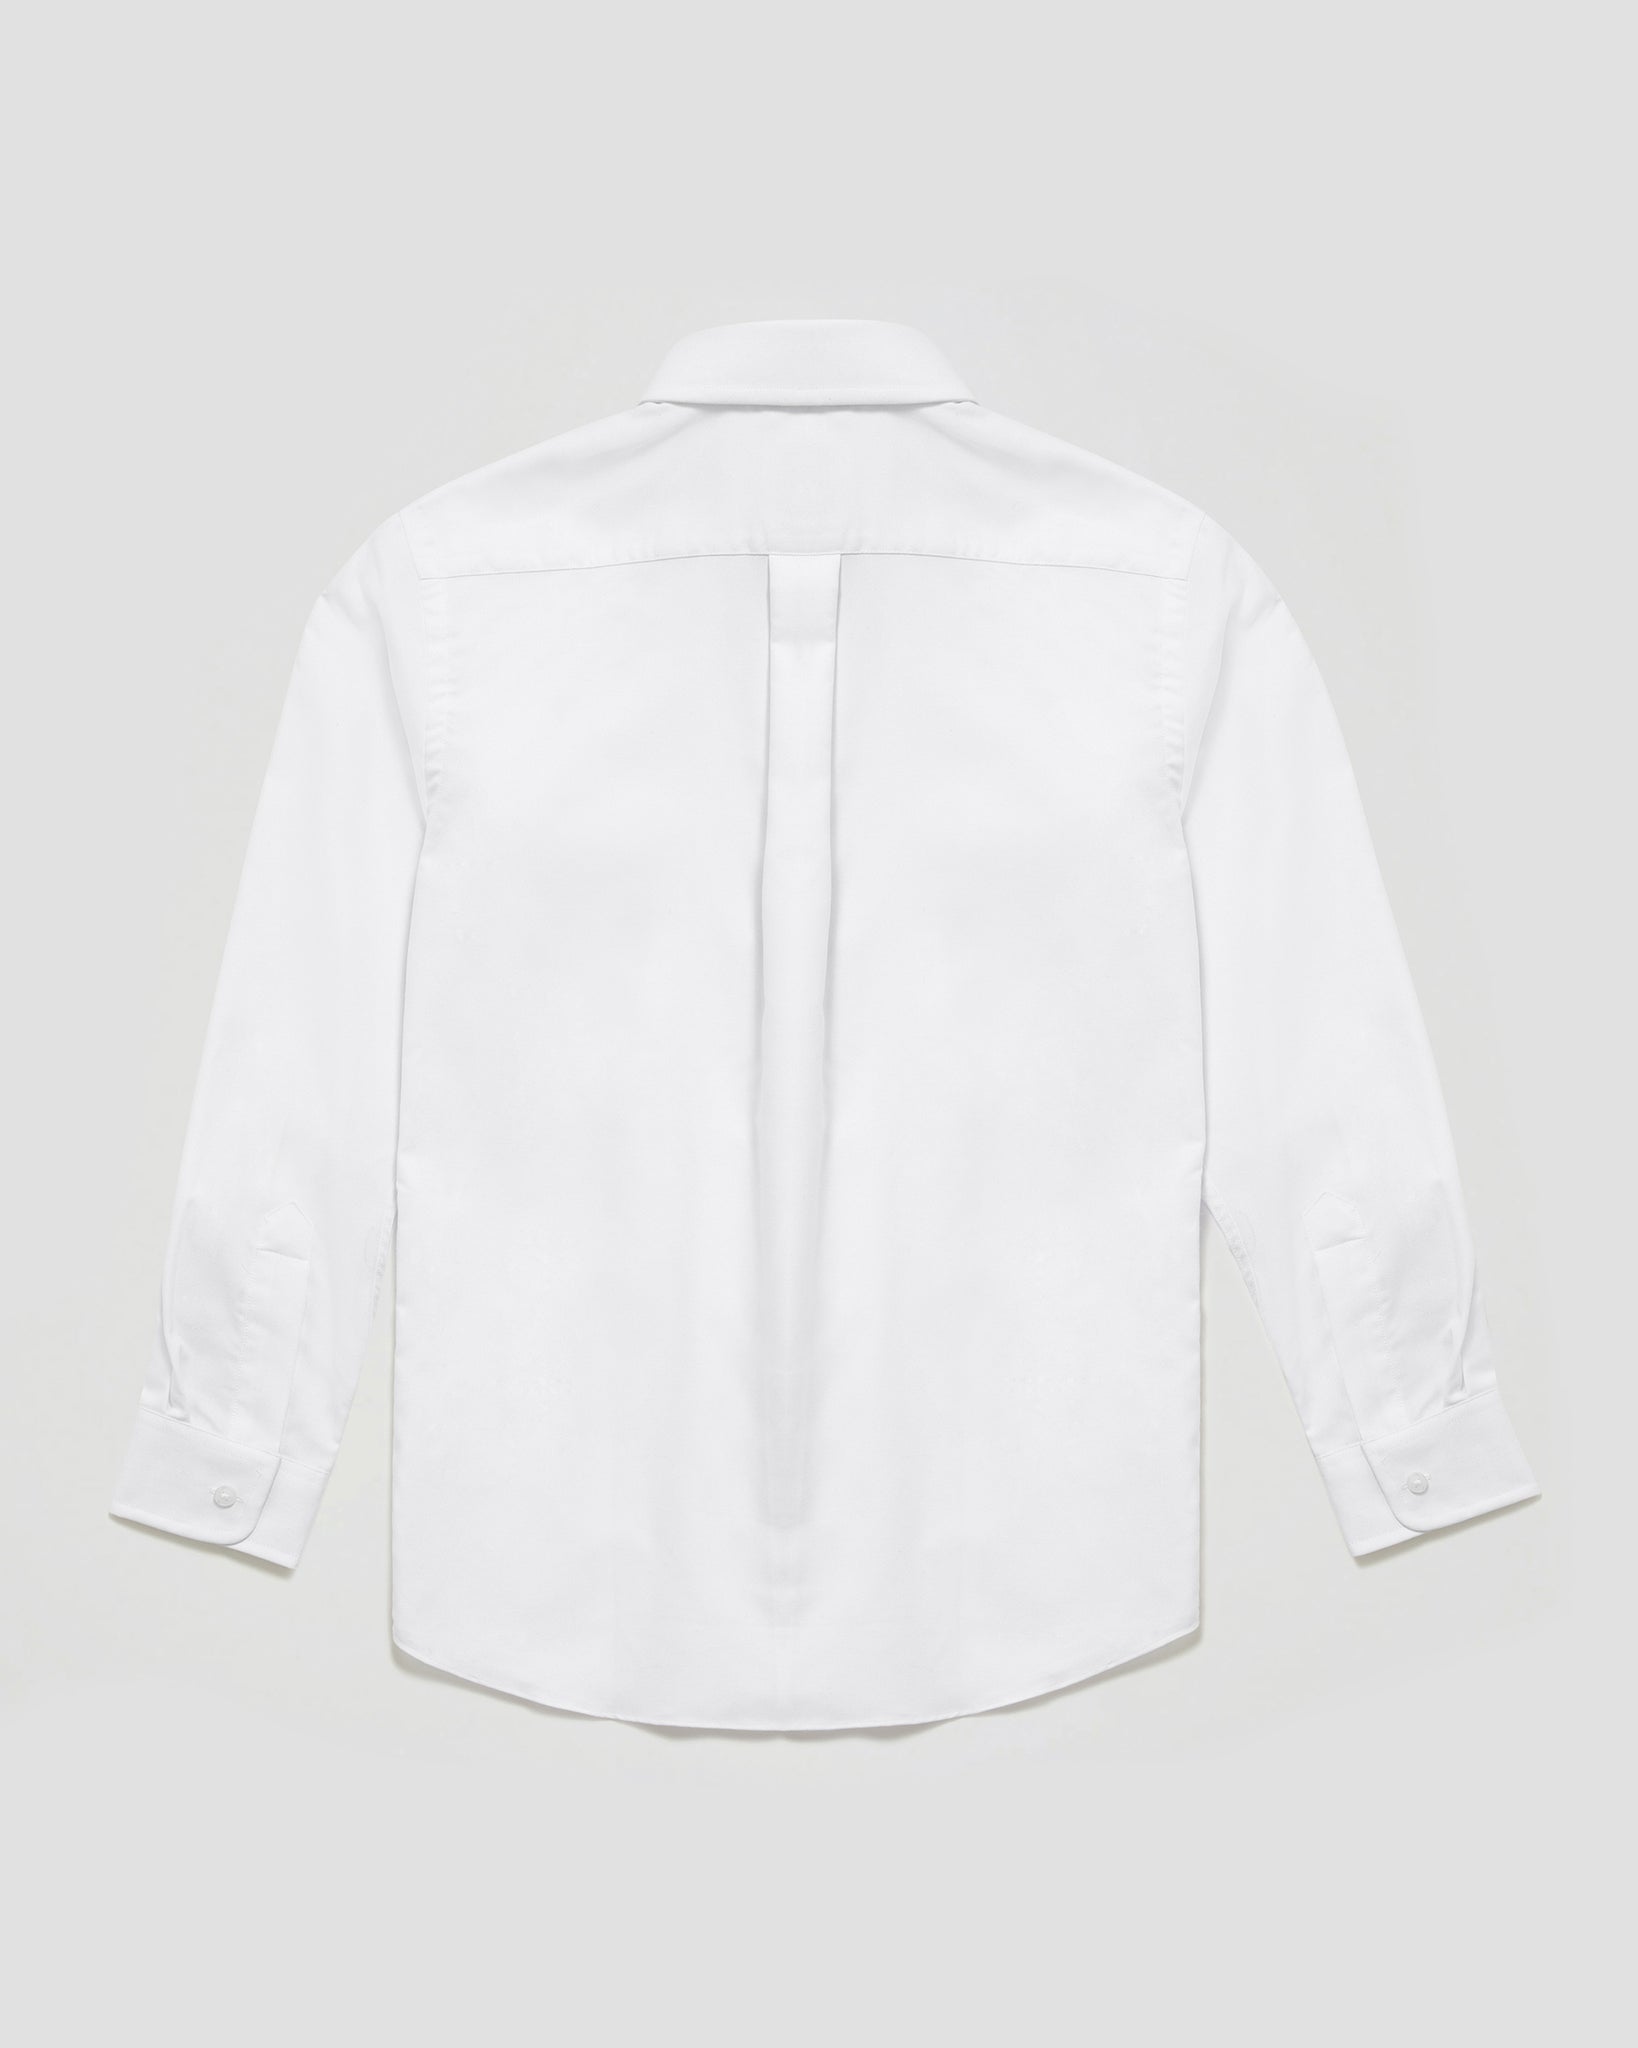 MagnaClick Solid Oxford Shirt (Kids) - White